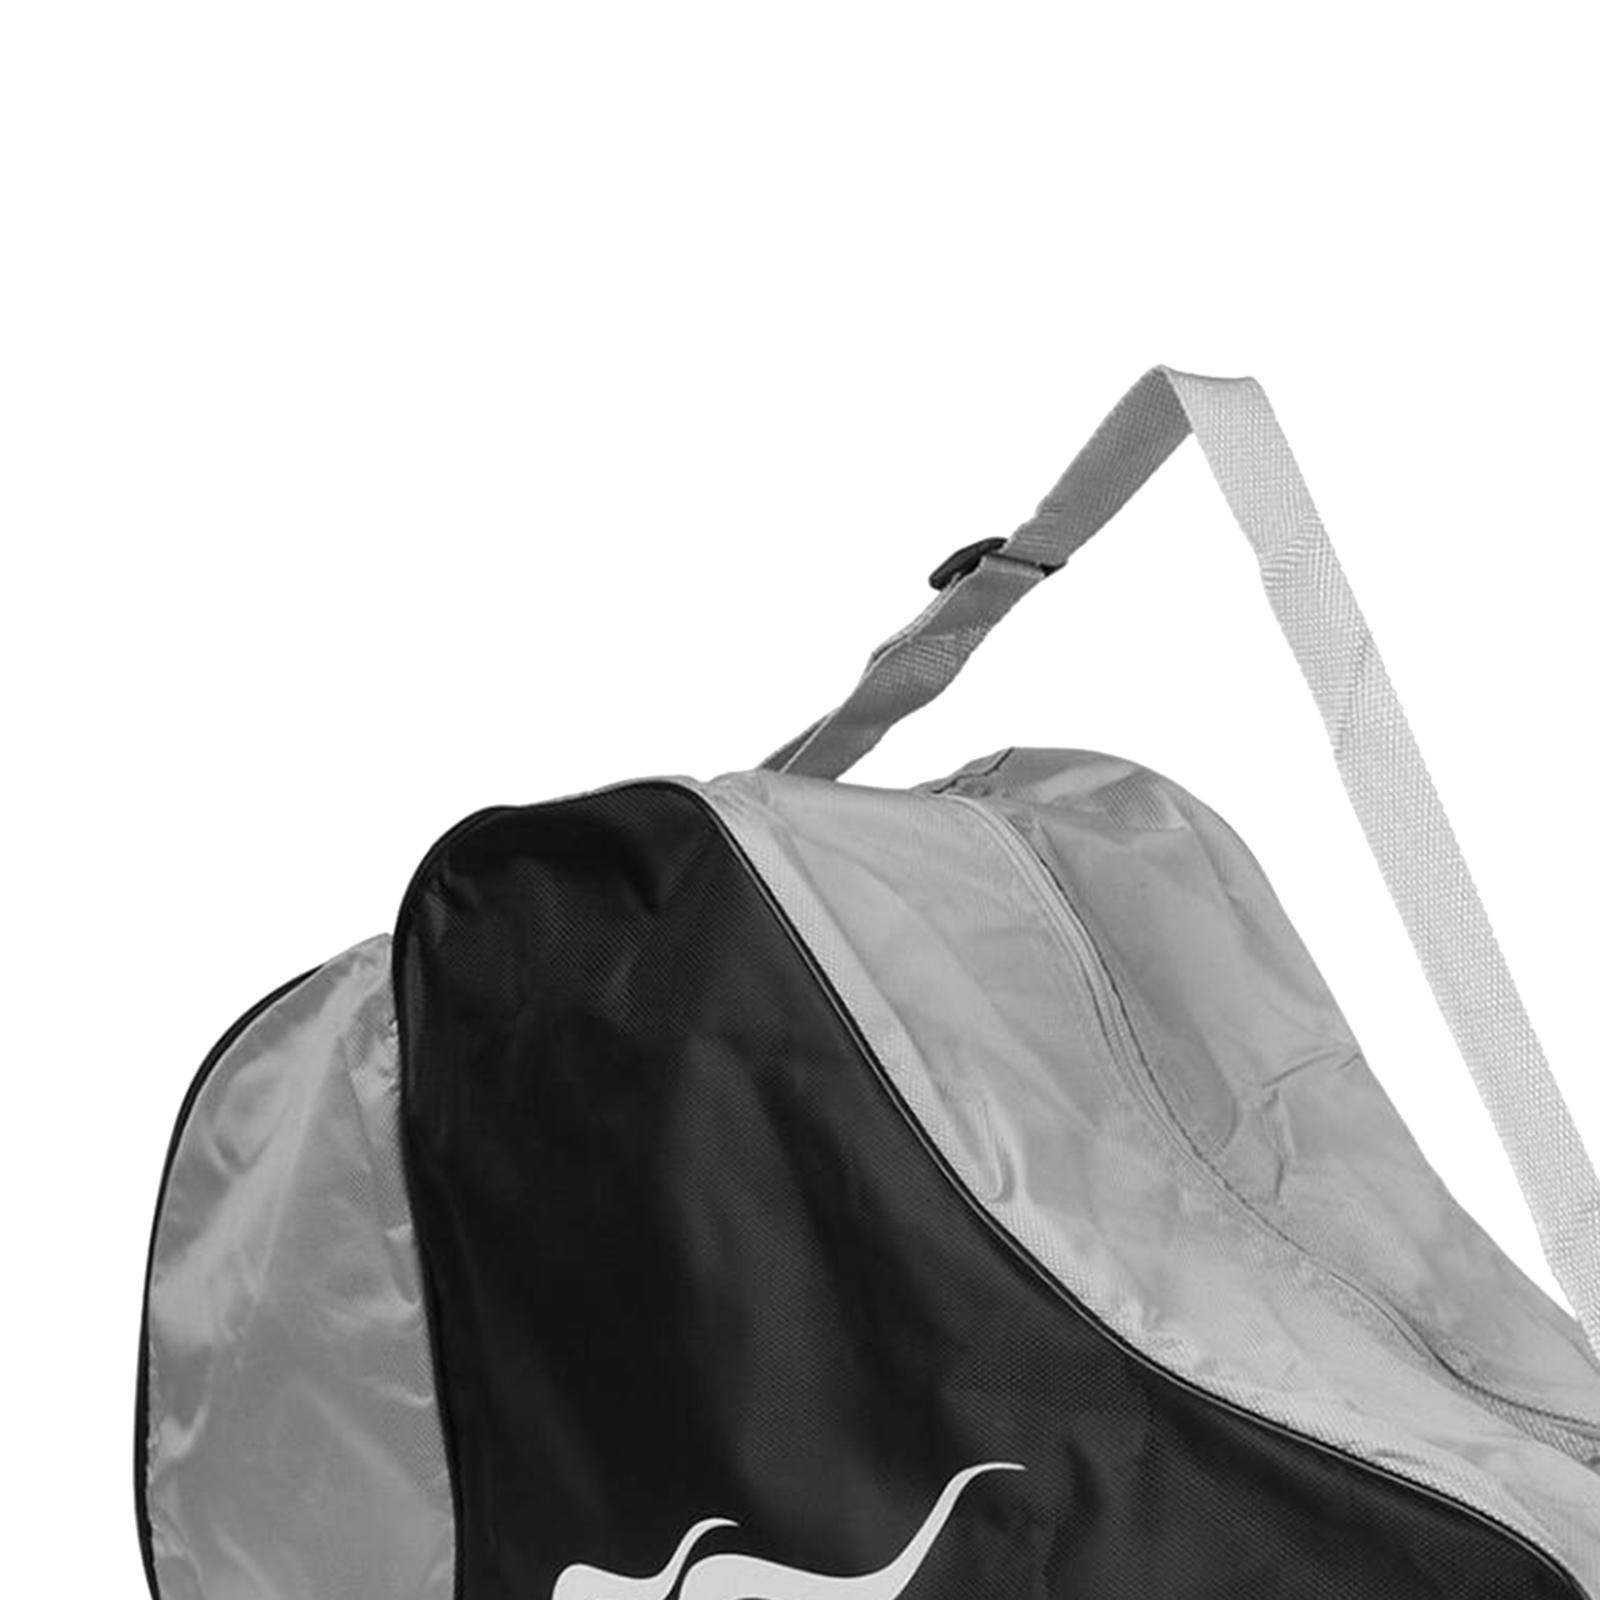 Roller Skating Boots Bag Oxford Cloth Waterproof Handbag Backpack Black